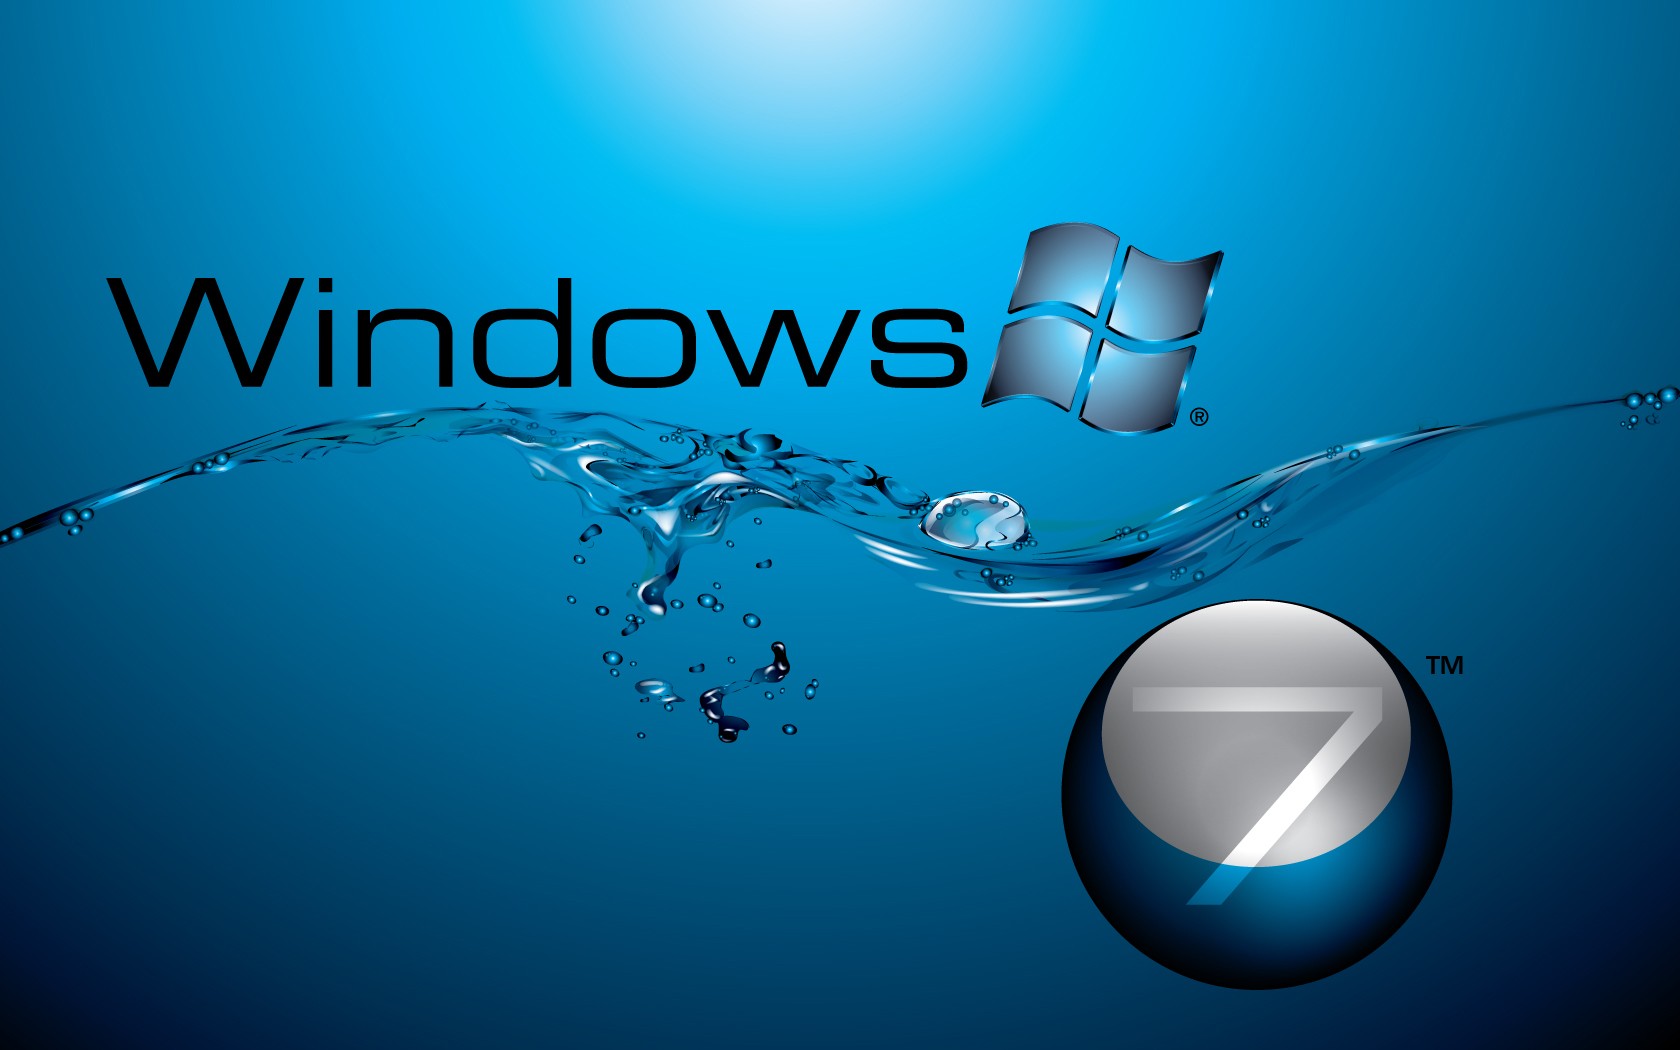 windows 8 wallpaper hd 1080p free download #19